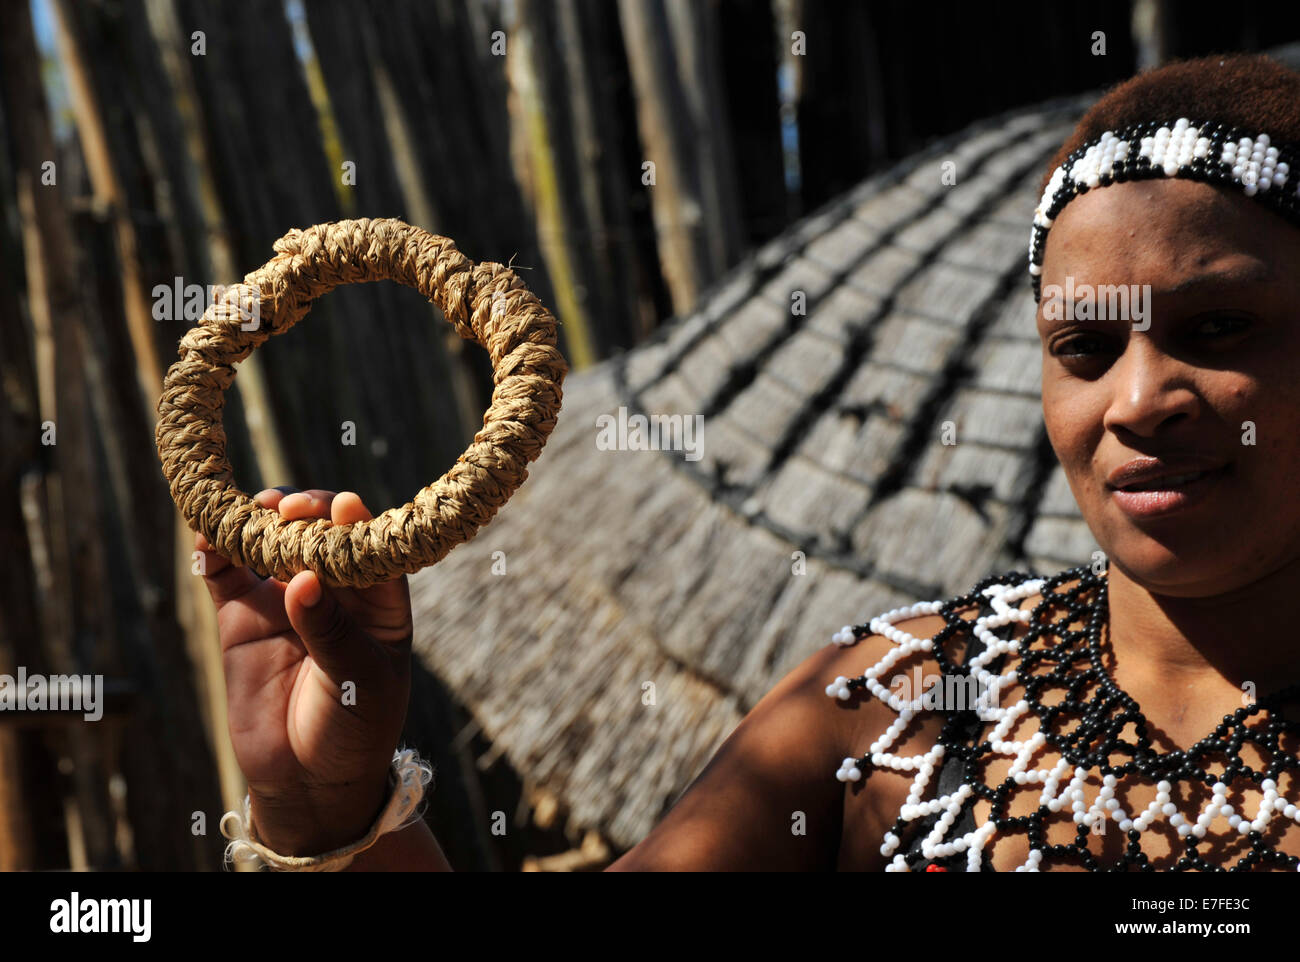 Eshowe, KwaZulu-Natal, South Africa, Zulu maiden shows grass ring, Inkatha, balance clay pot carried on head, Shakaland, culture, theme village Stock Photo